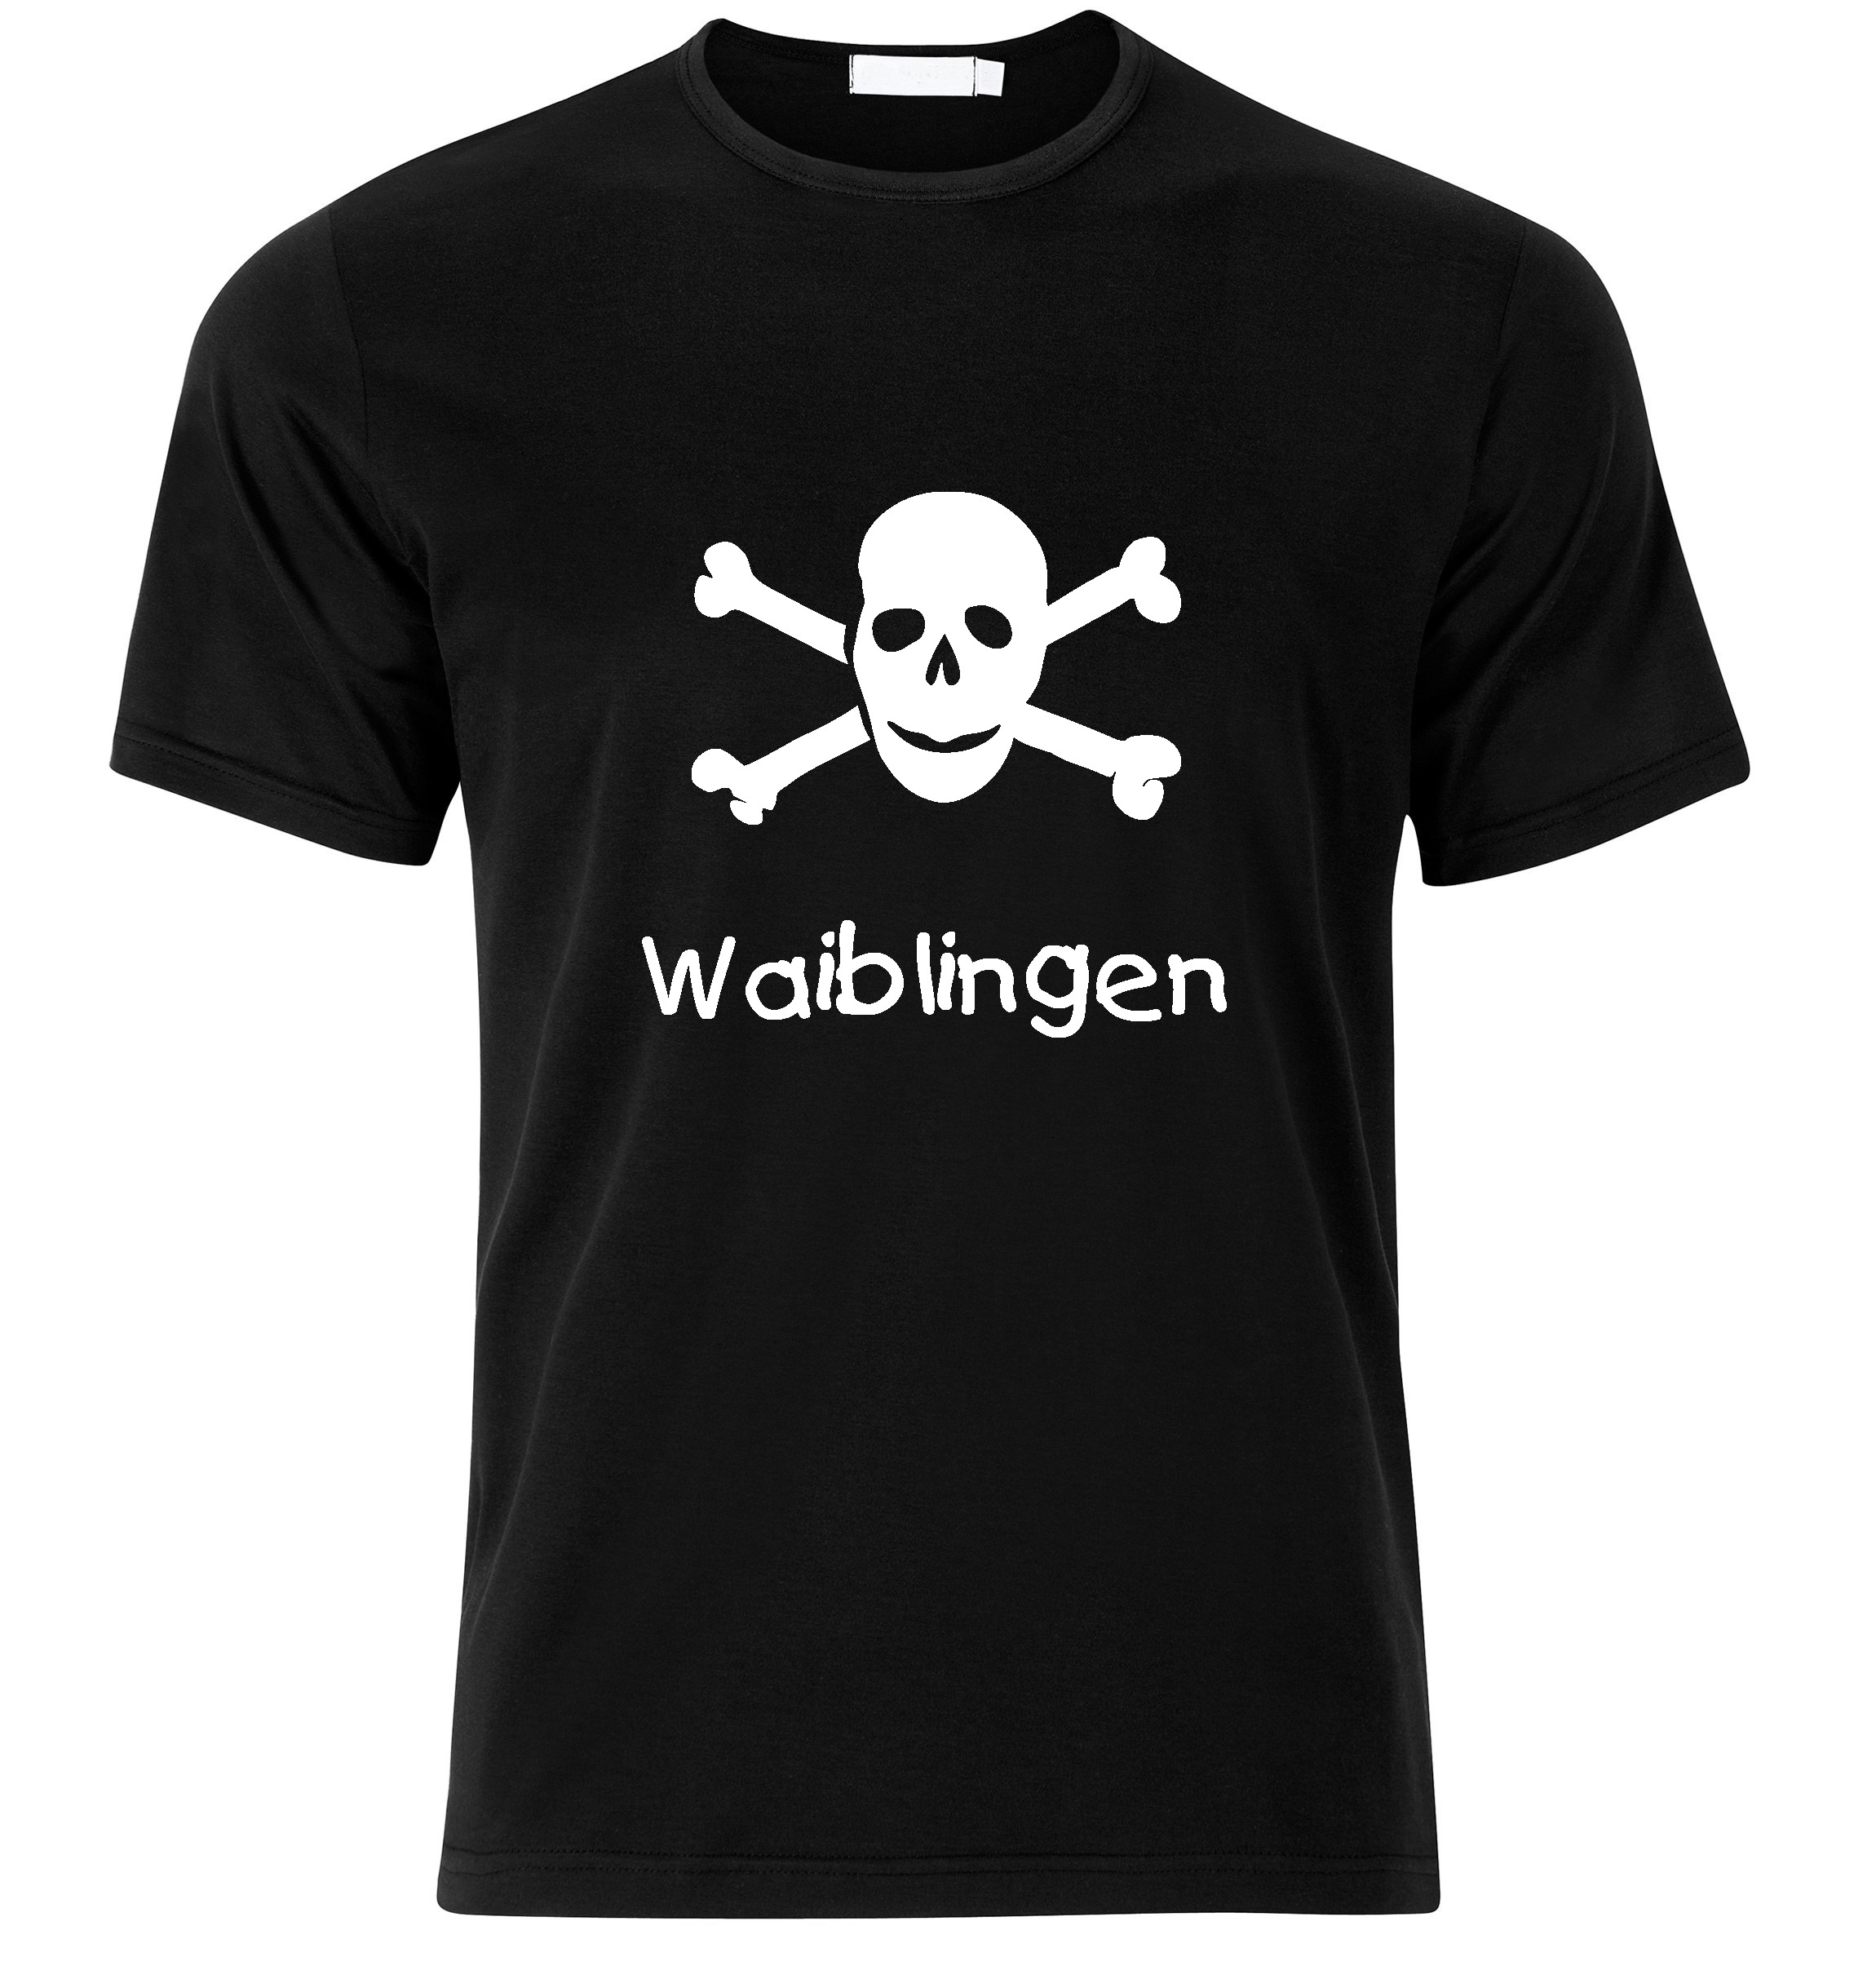 T-Shirt Waiblingen Jolly Roger, Totenkopf